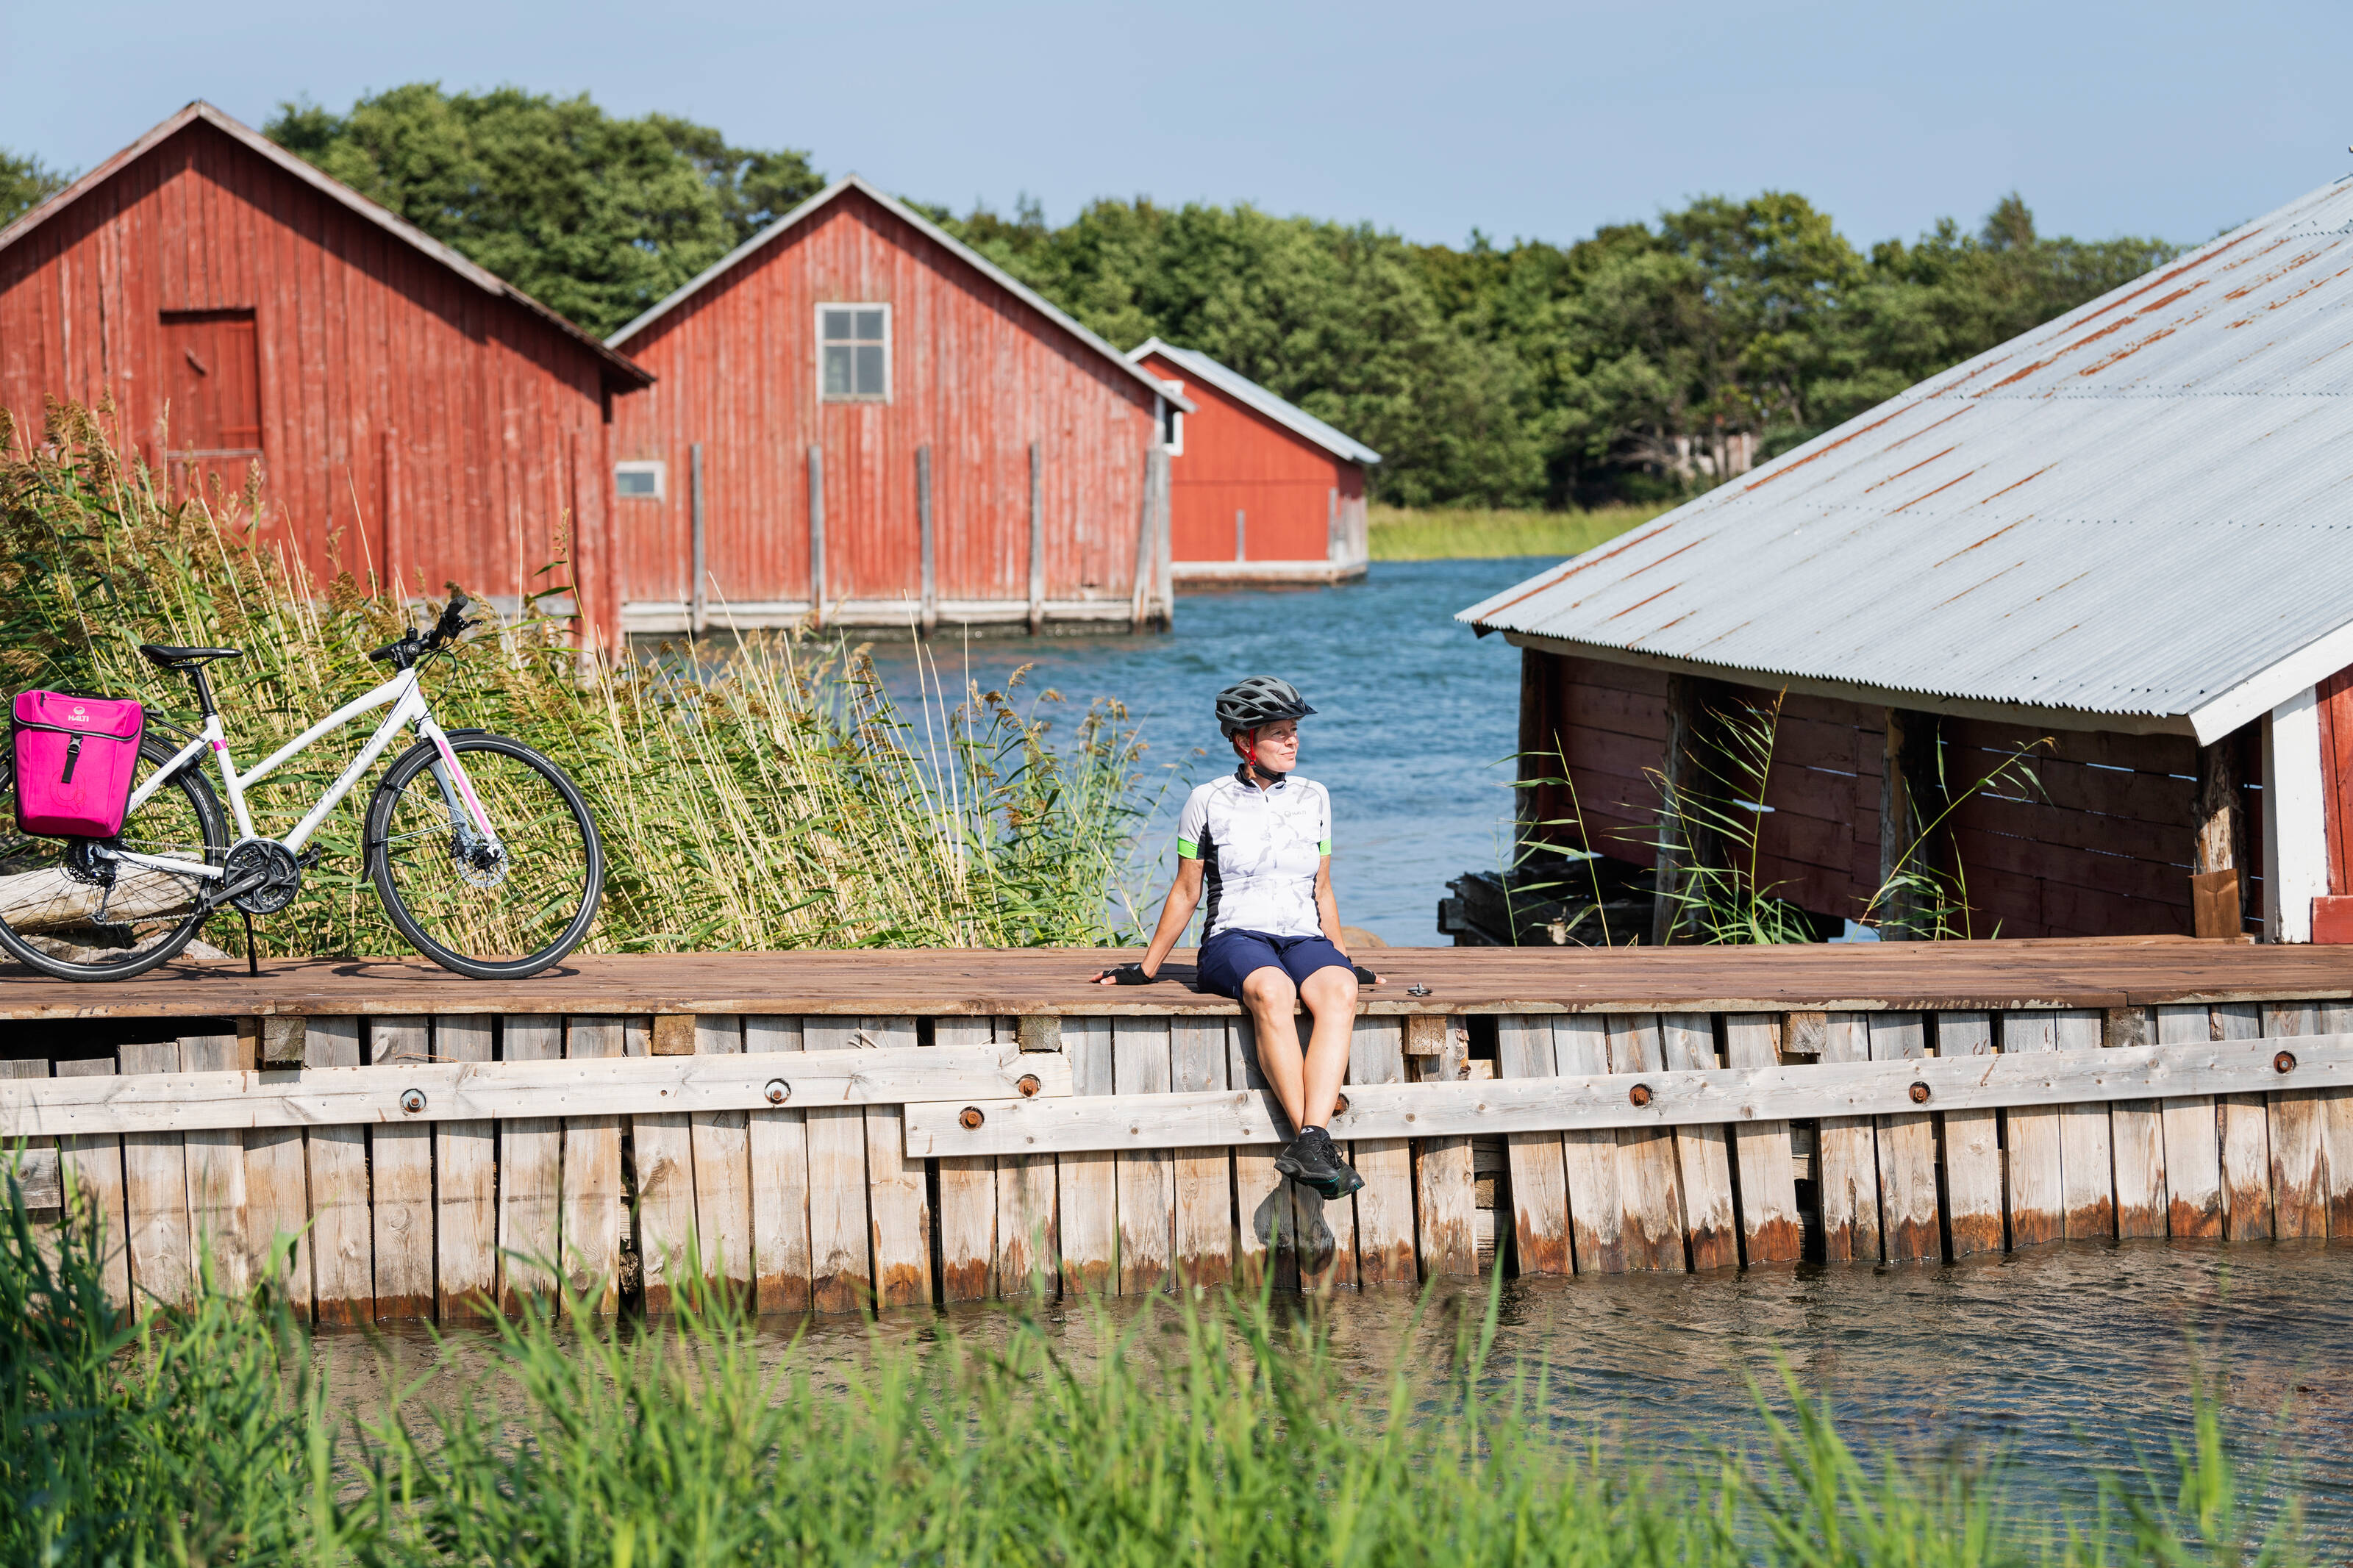 a cyclists on a break in an idyllic wooden village in the Finnish Archipelago